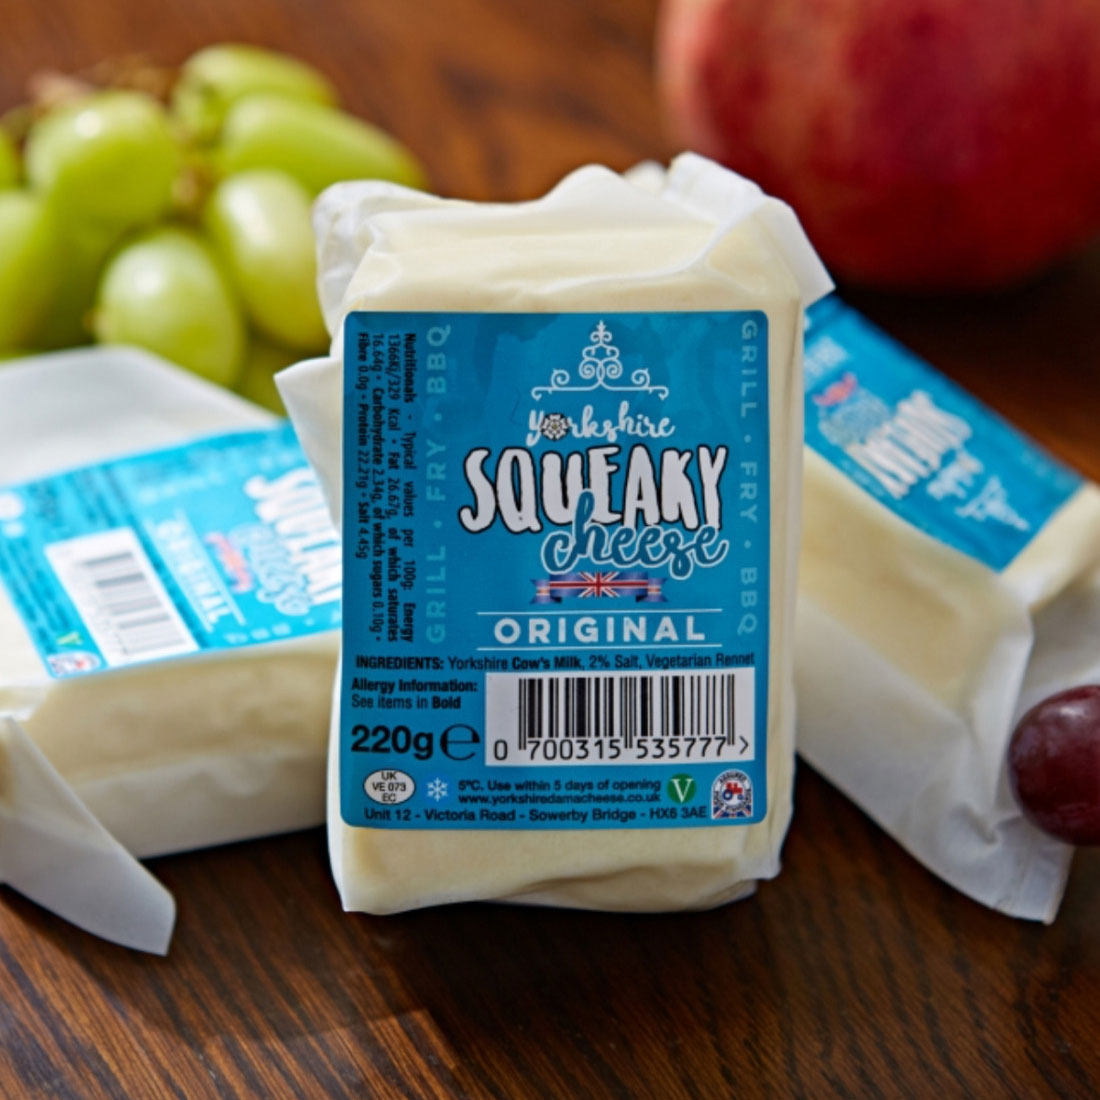 Yorkshire Dama Squeaky Cheese